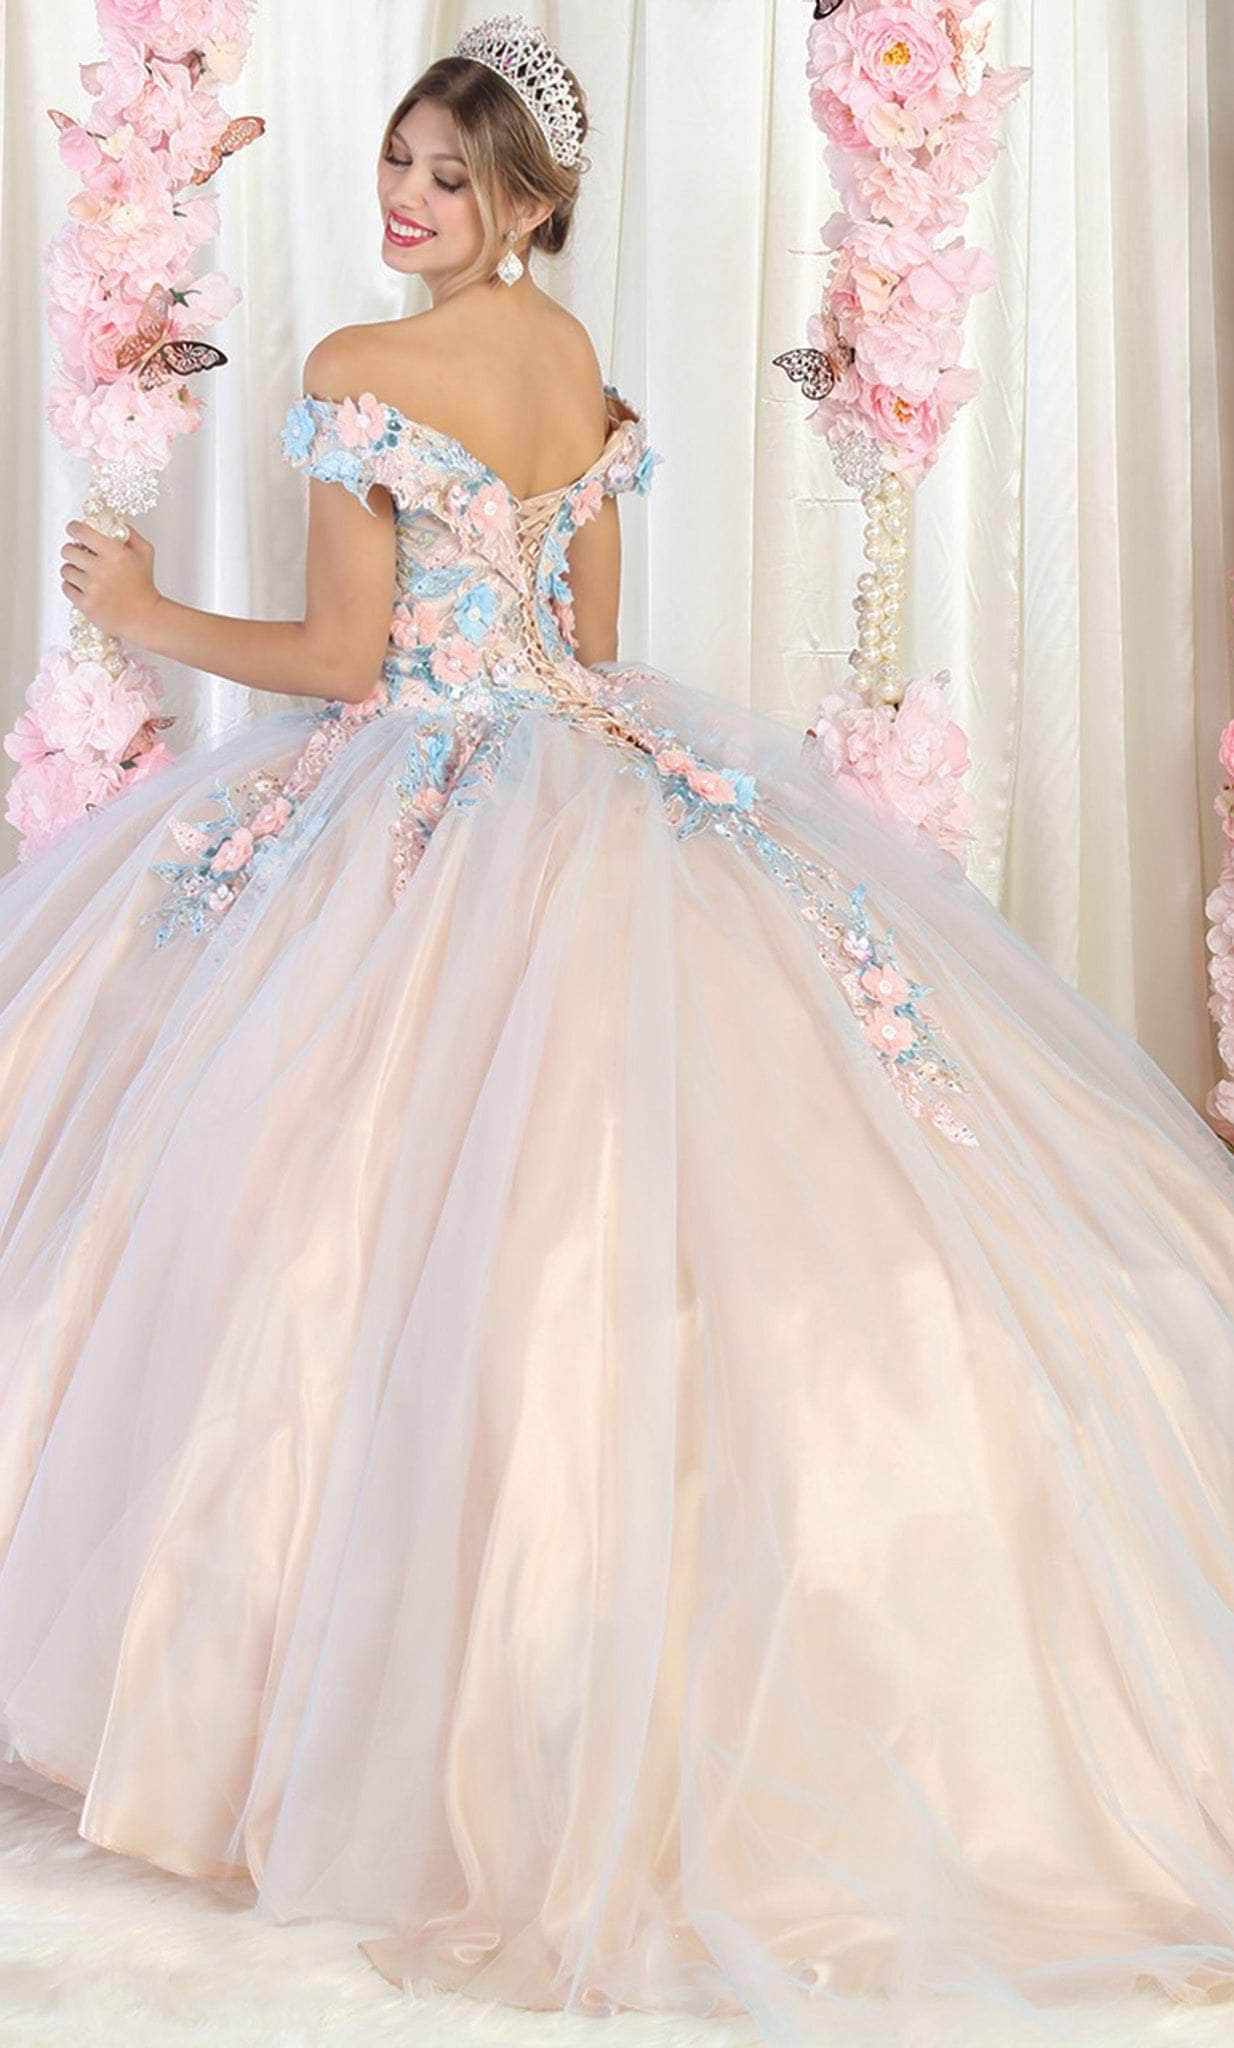 May Queen LK164 - Pastel Blossoms Quinceanera Ballgown Quinceanera Dresses